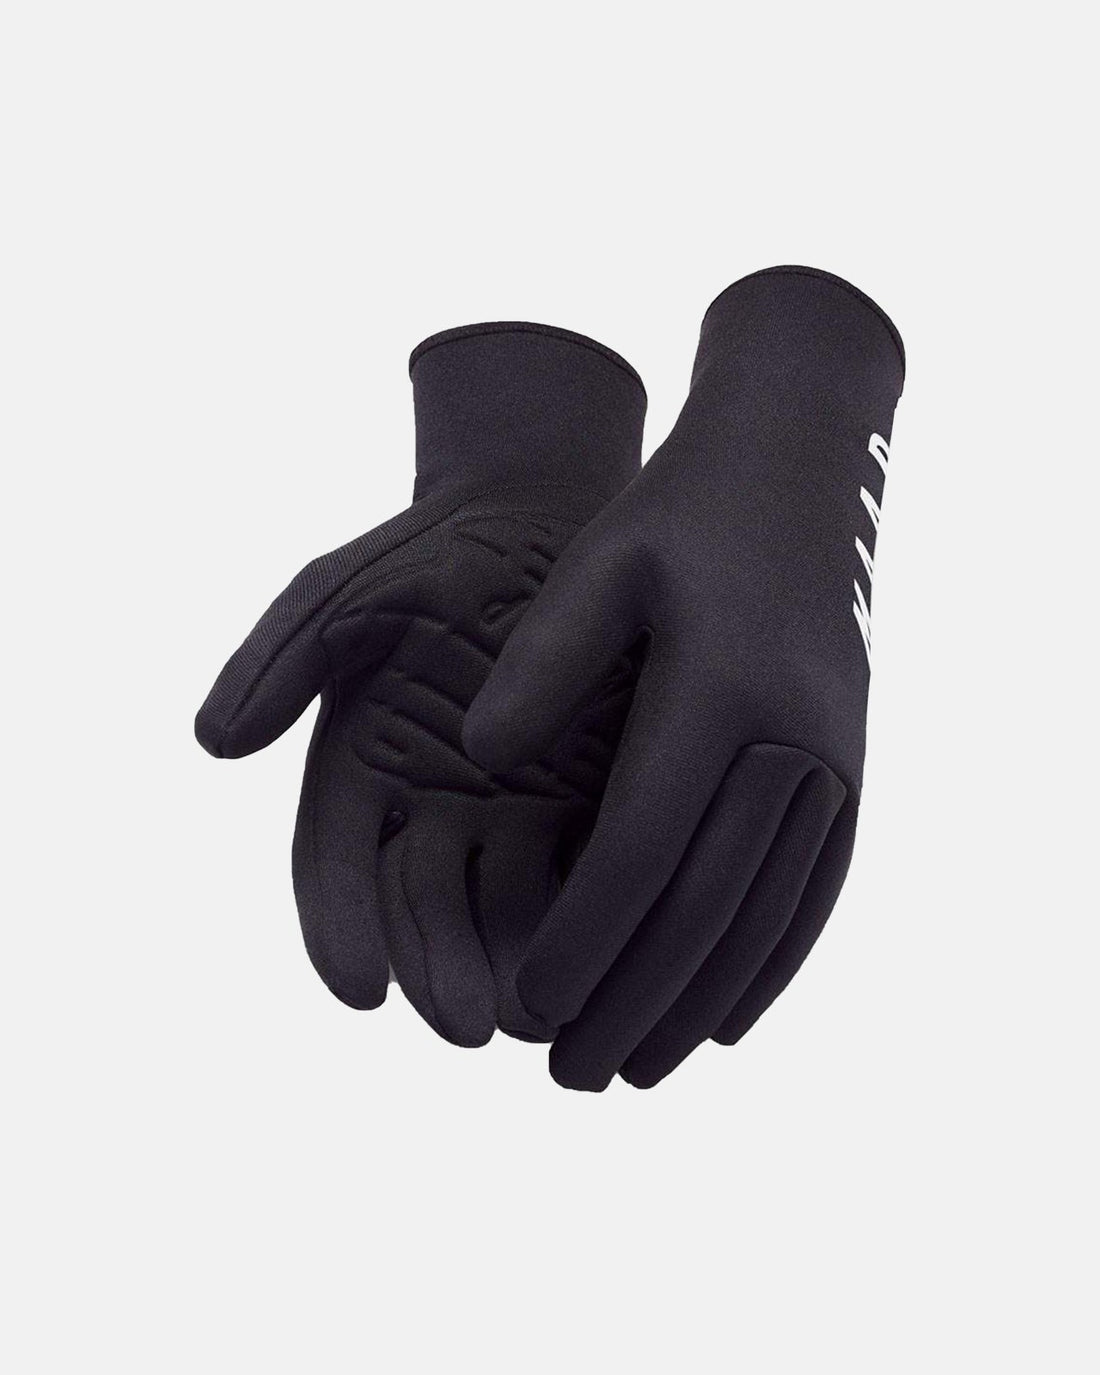 Deep Winter Neo Glove - Black - MAAP